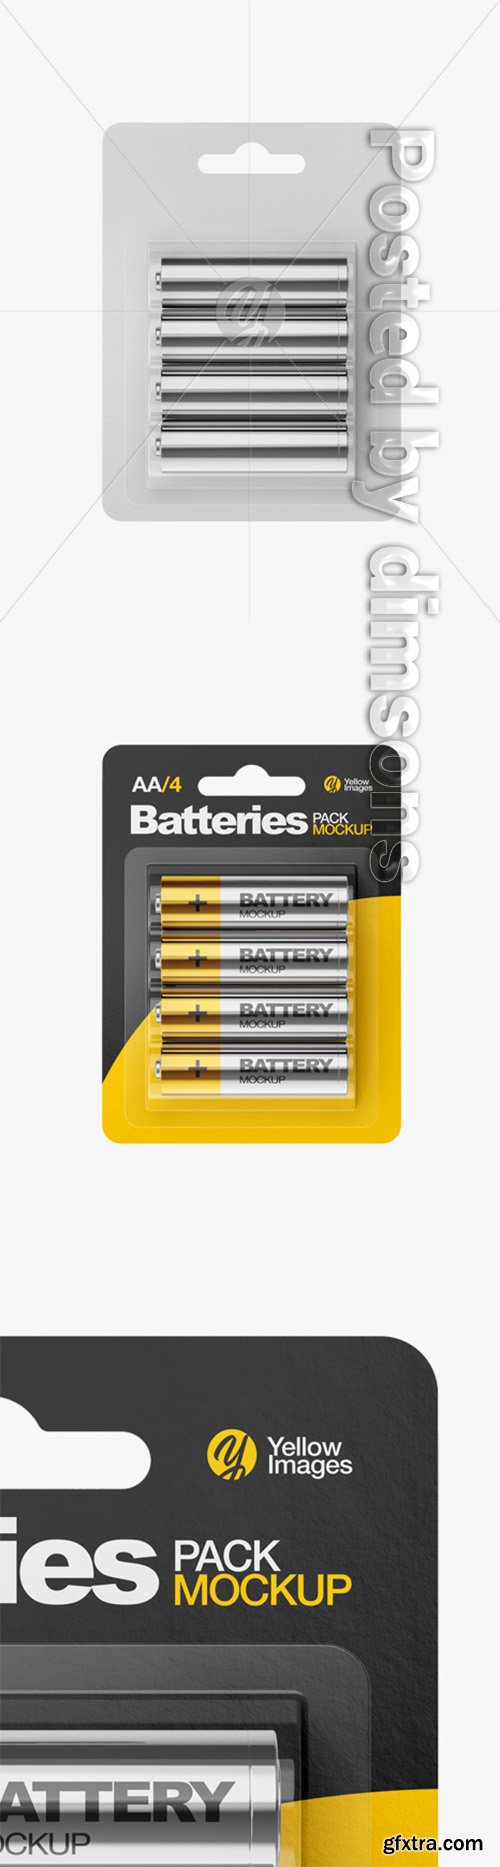 4 Pack Metallic Battery AA Mockup 33120